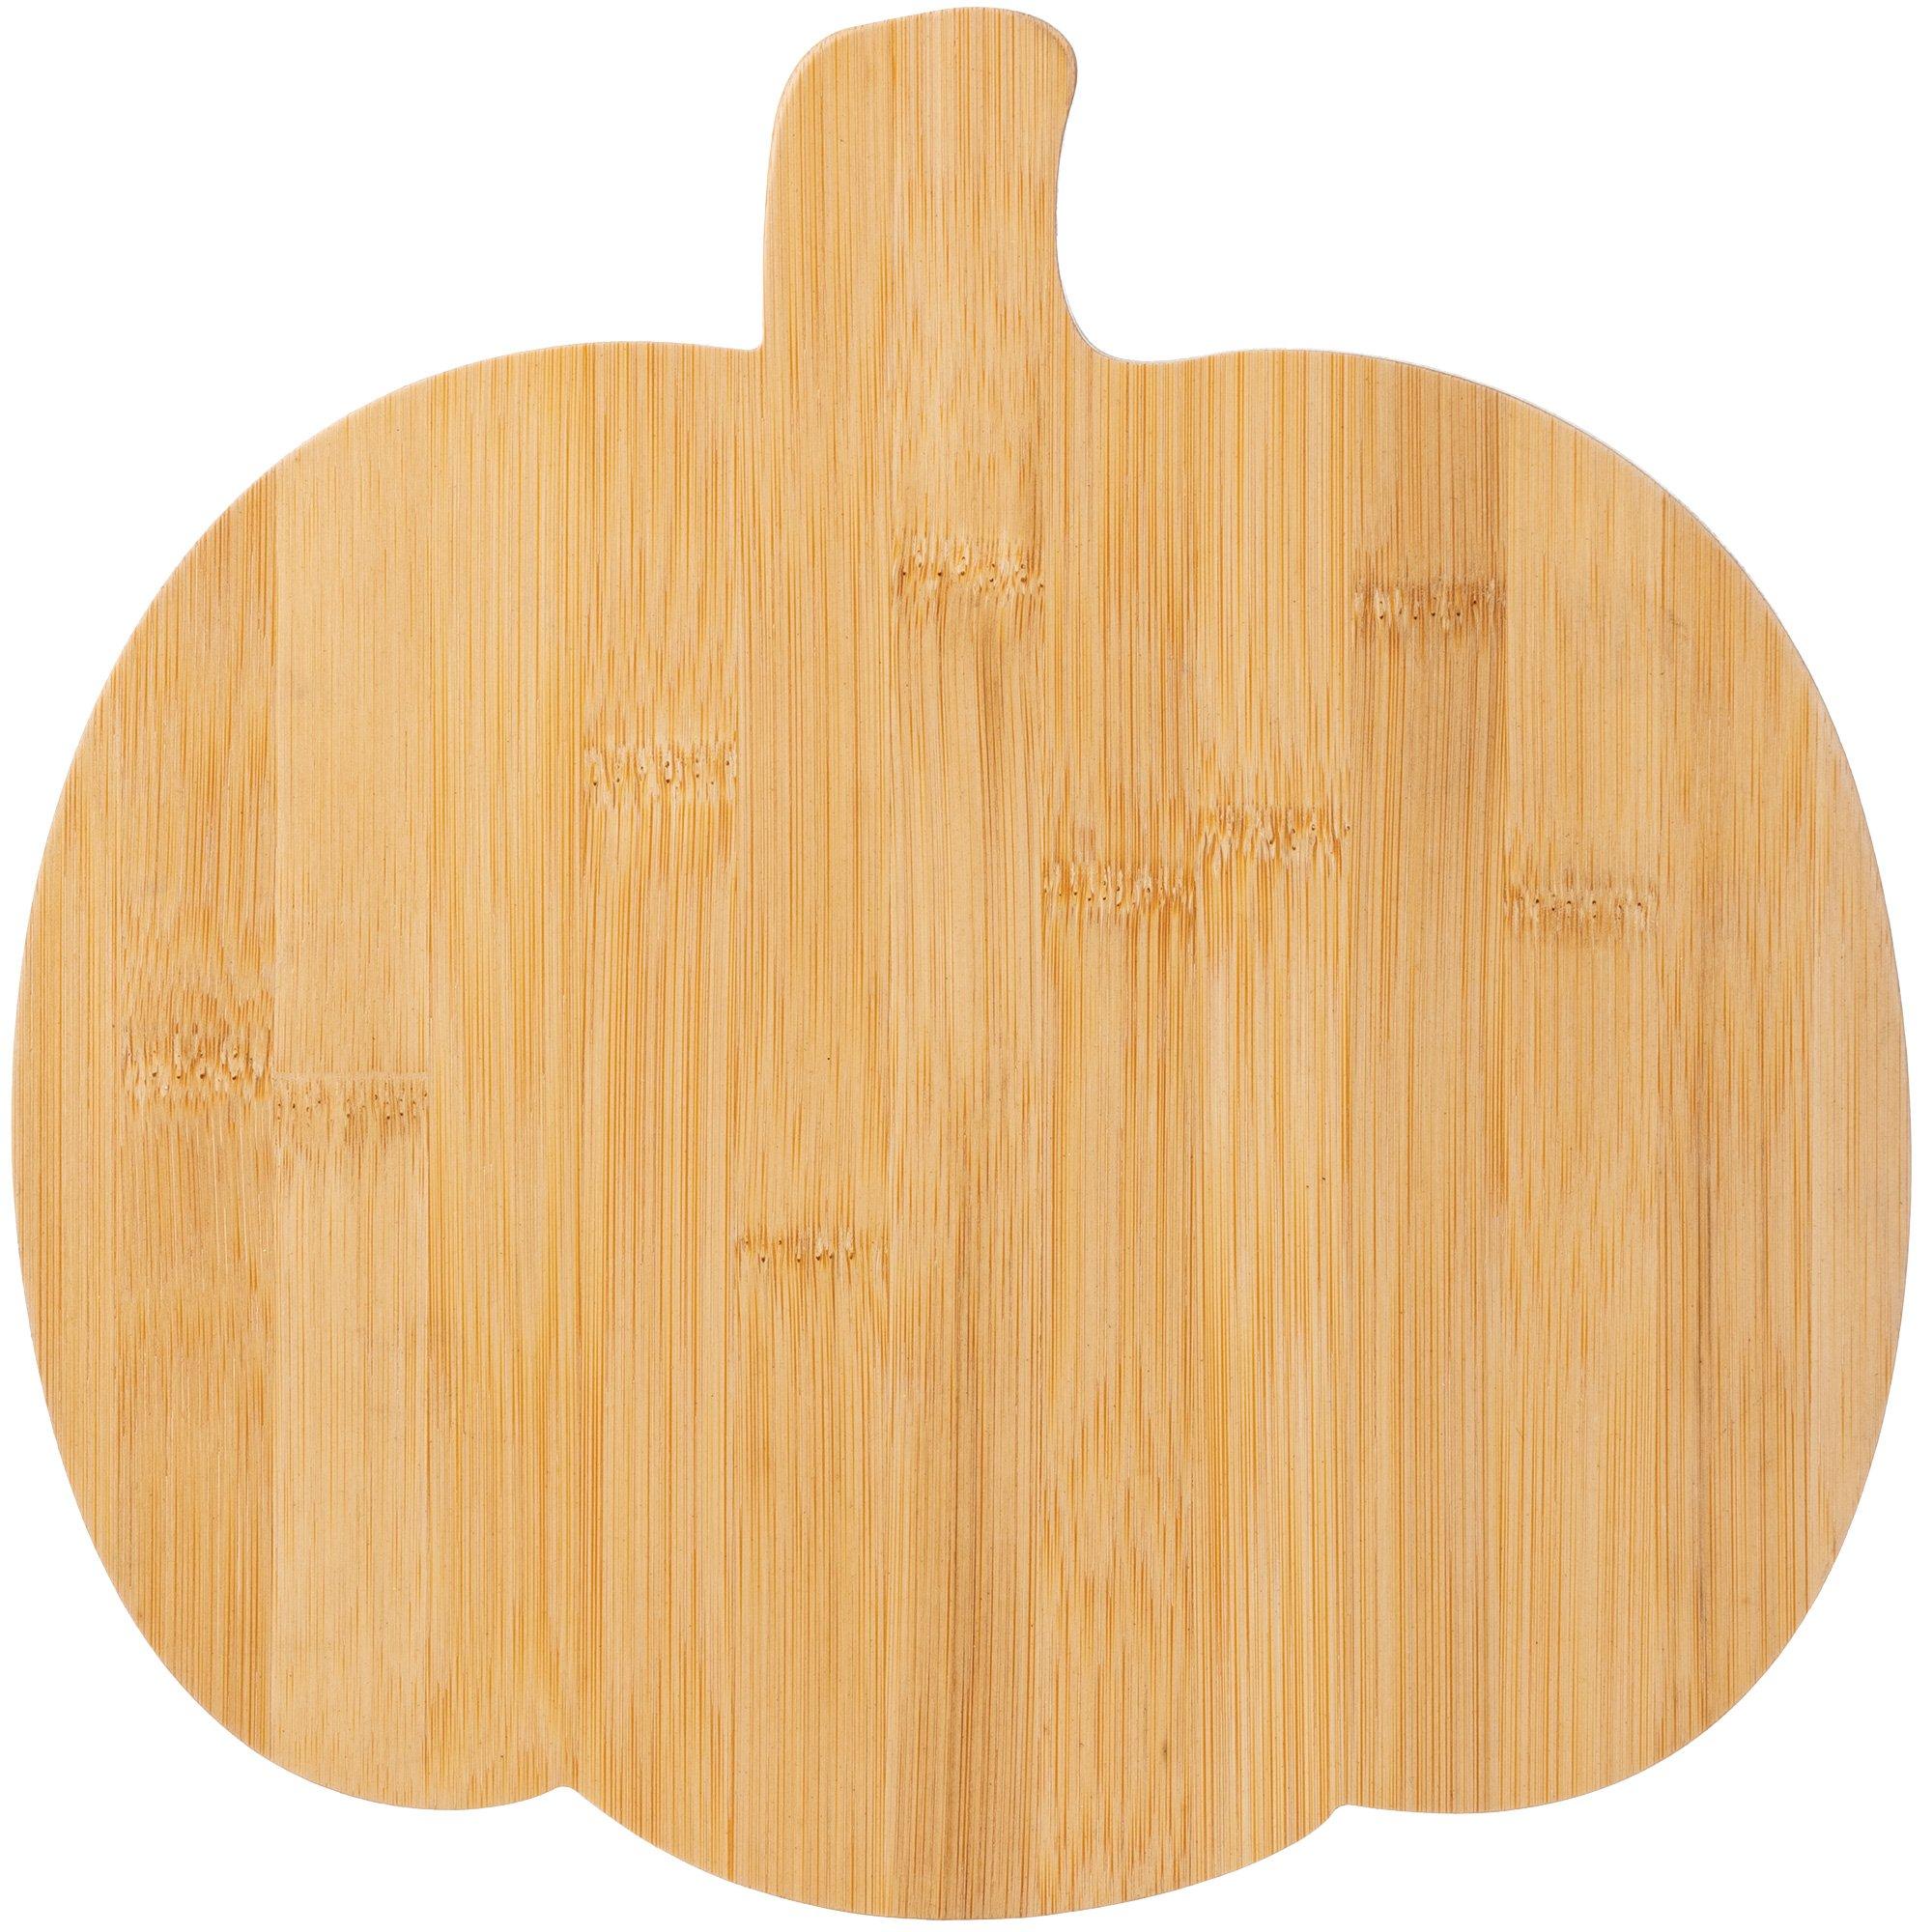 Pumpkin Bamboo Platter, 11in x 11in